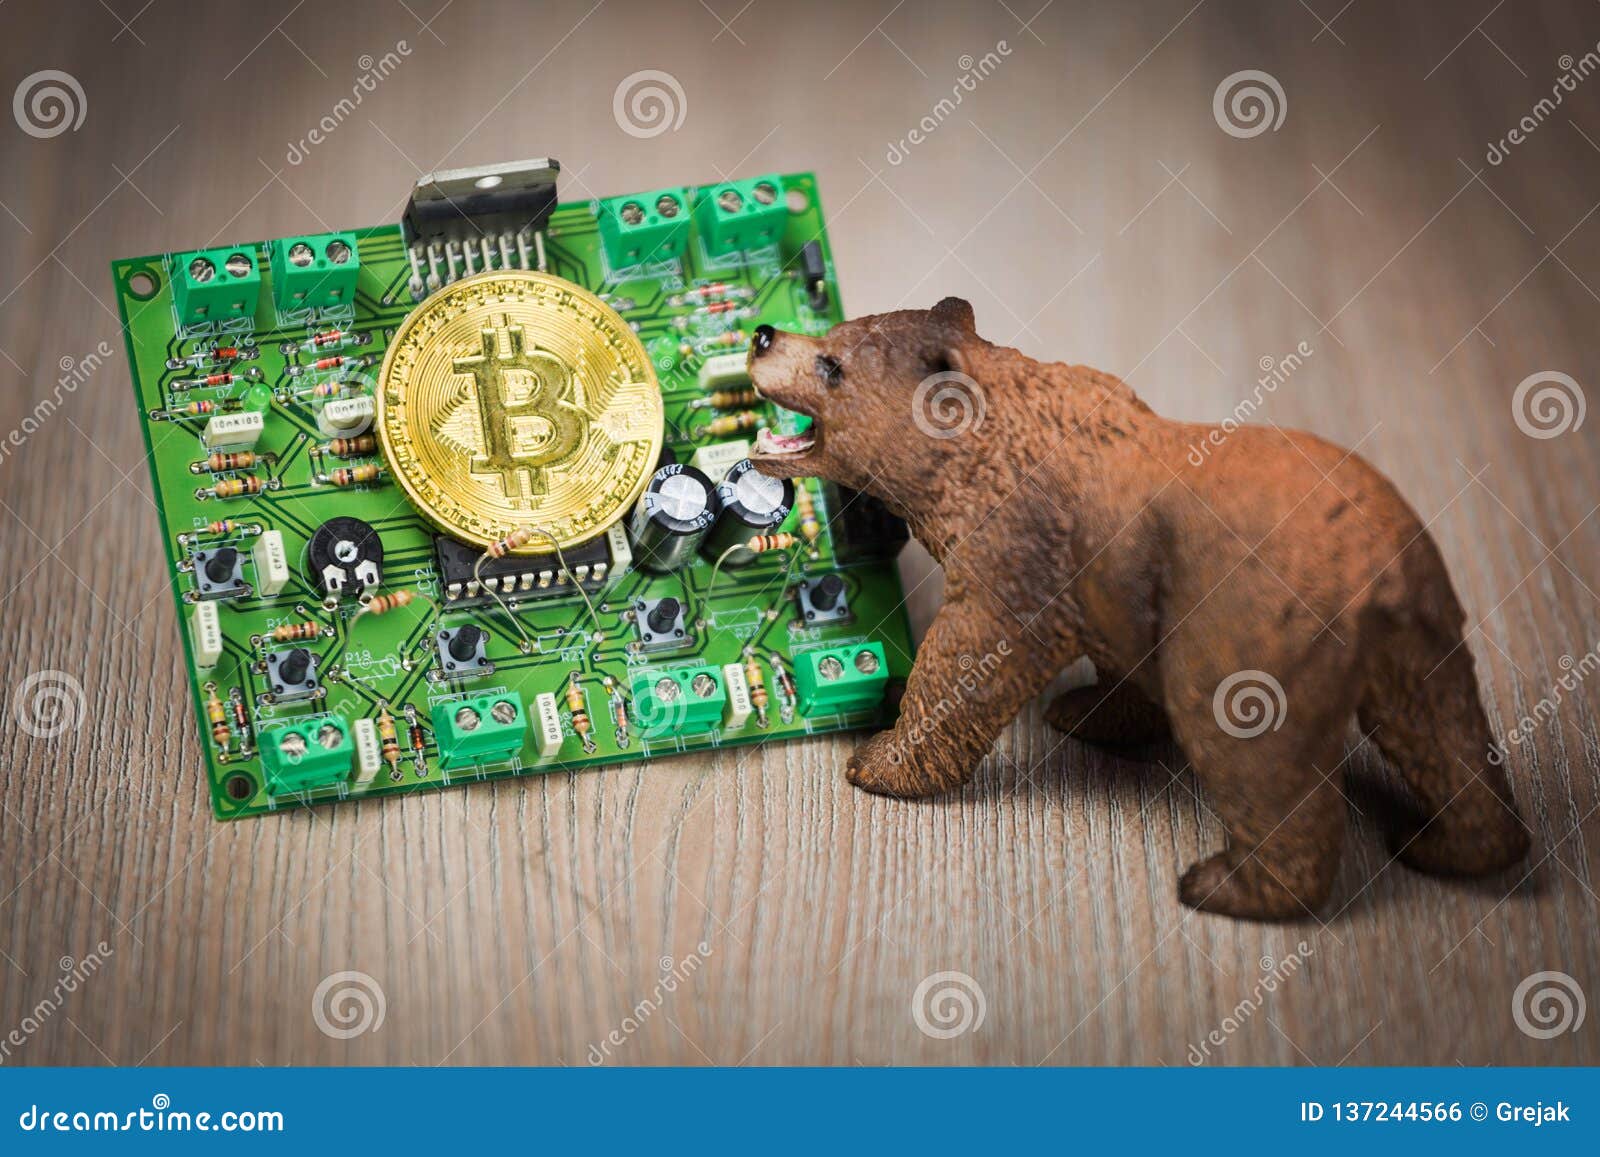 when did crypto bear market start